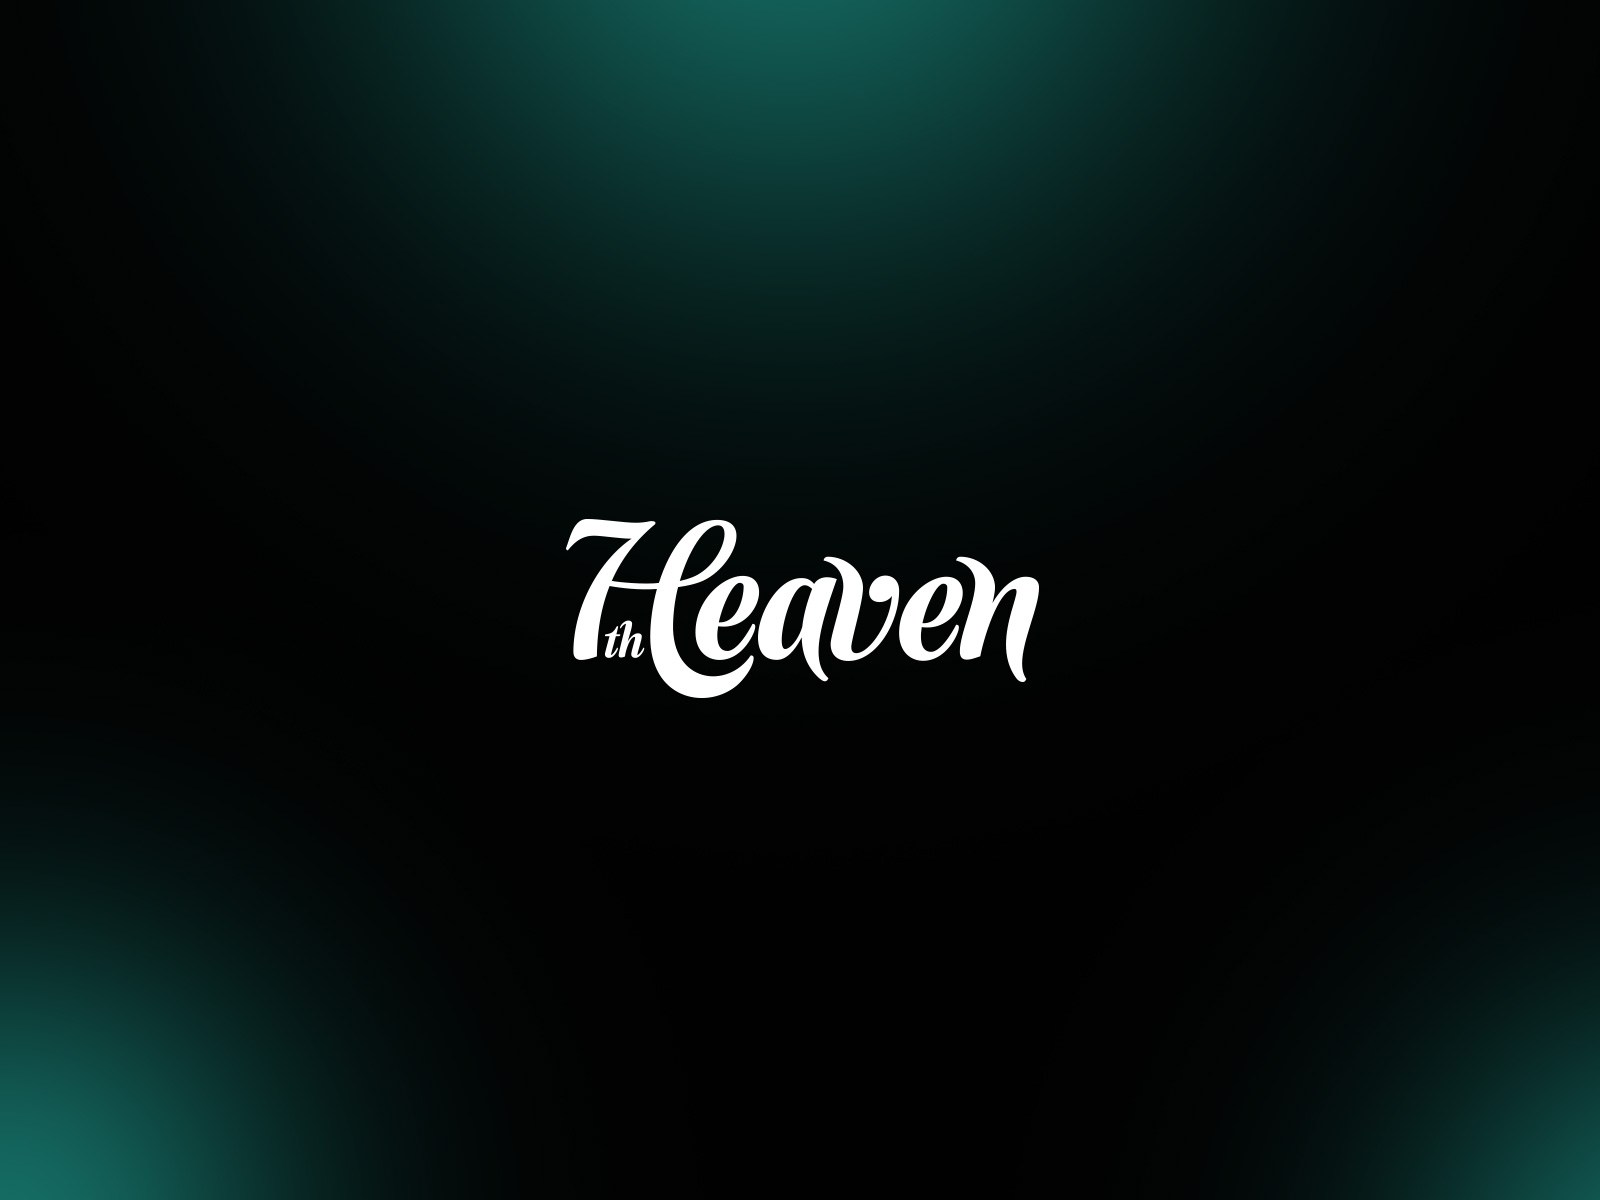 7th-heaven-logo-design.jpg